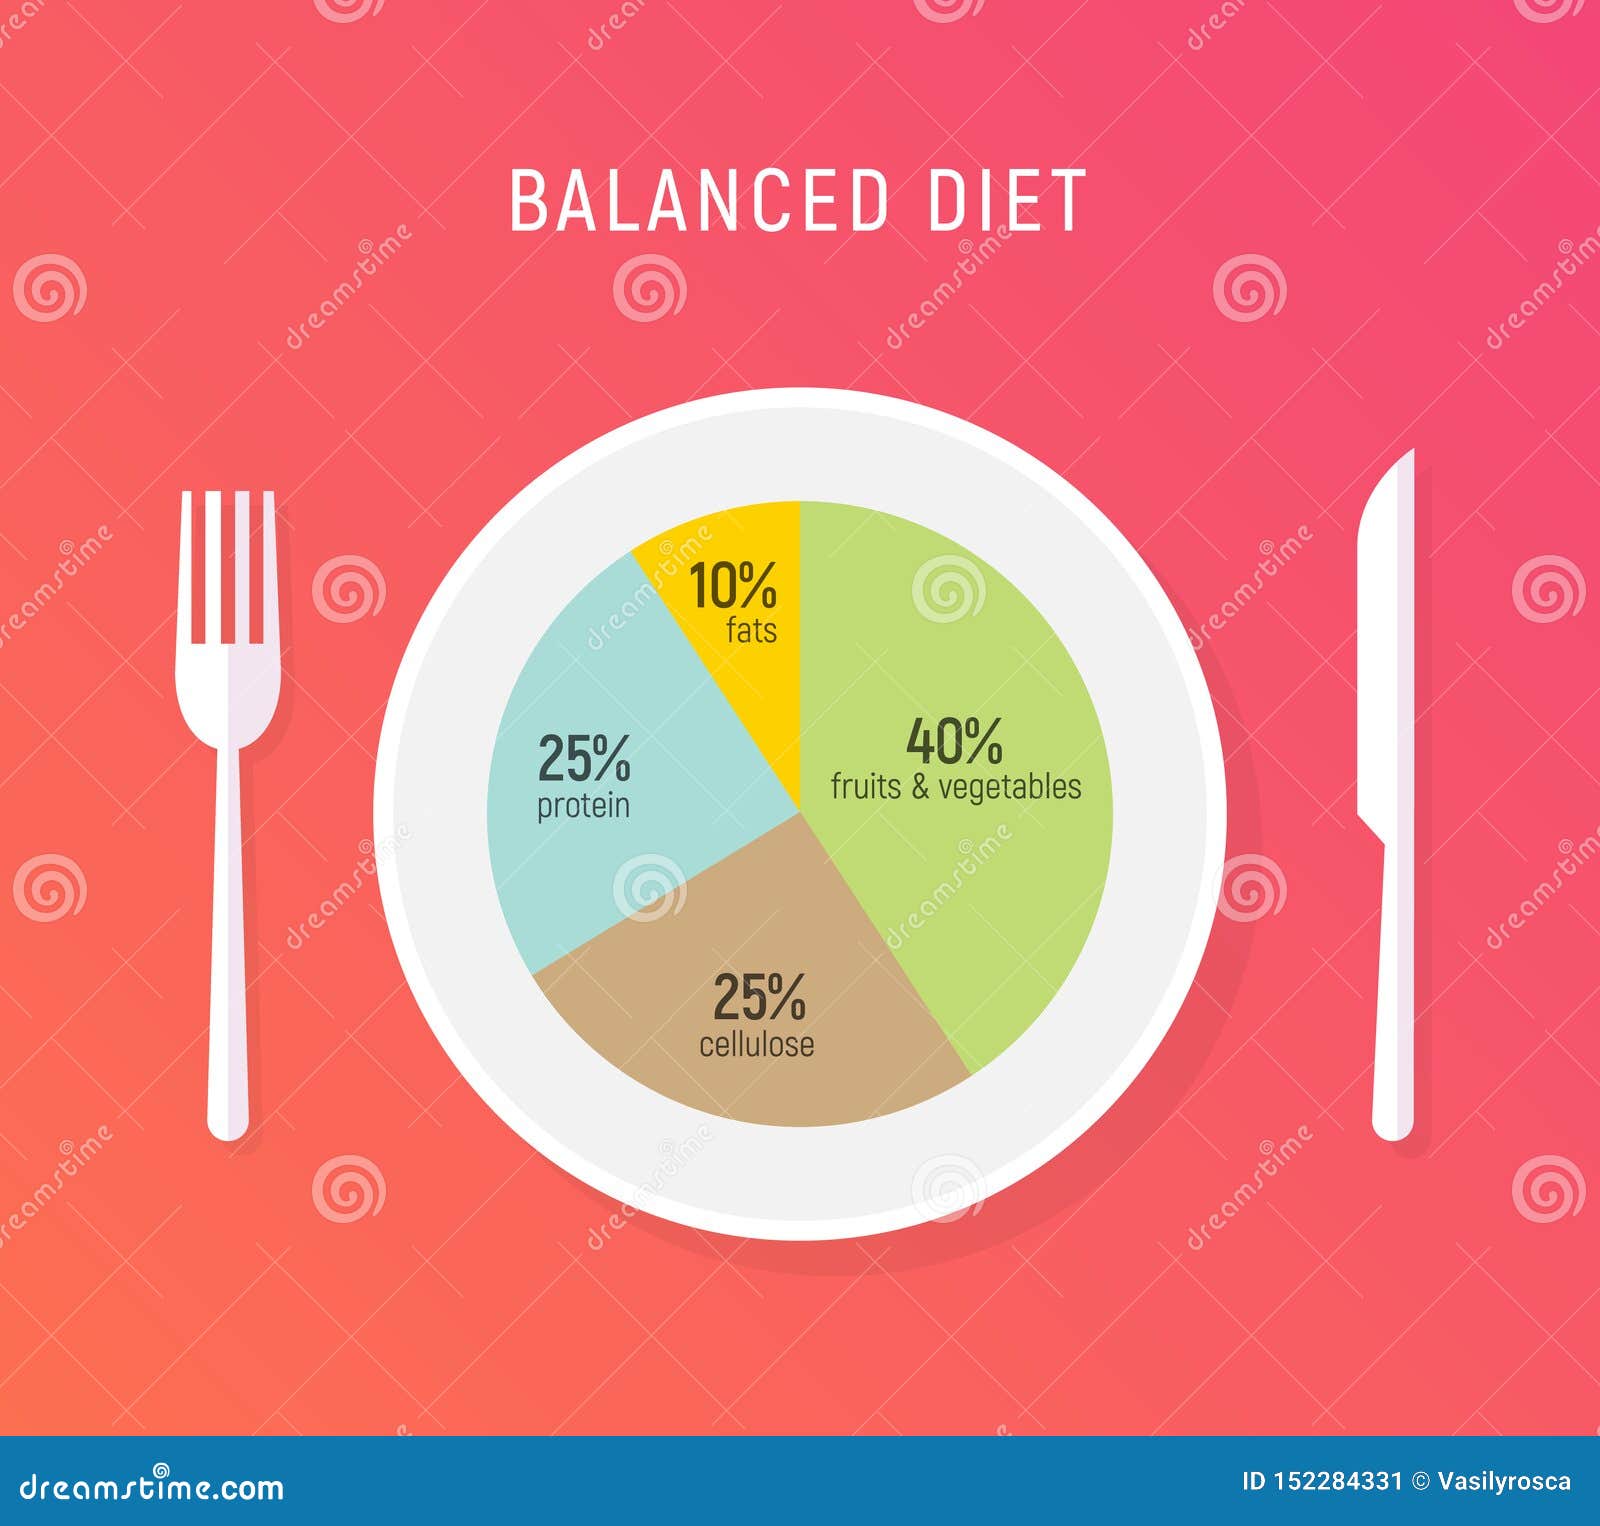 Nutrition Diet Chart